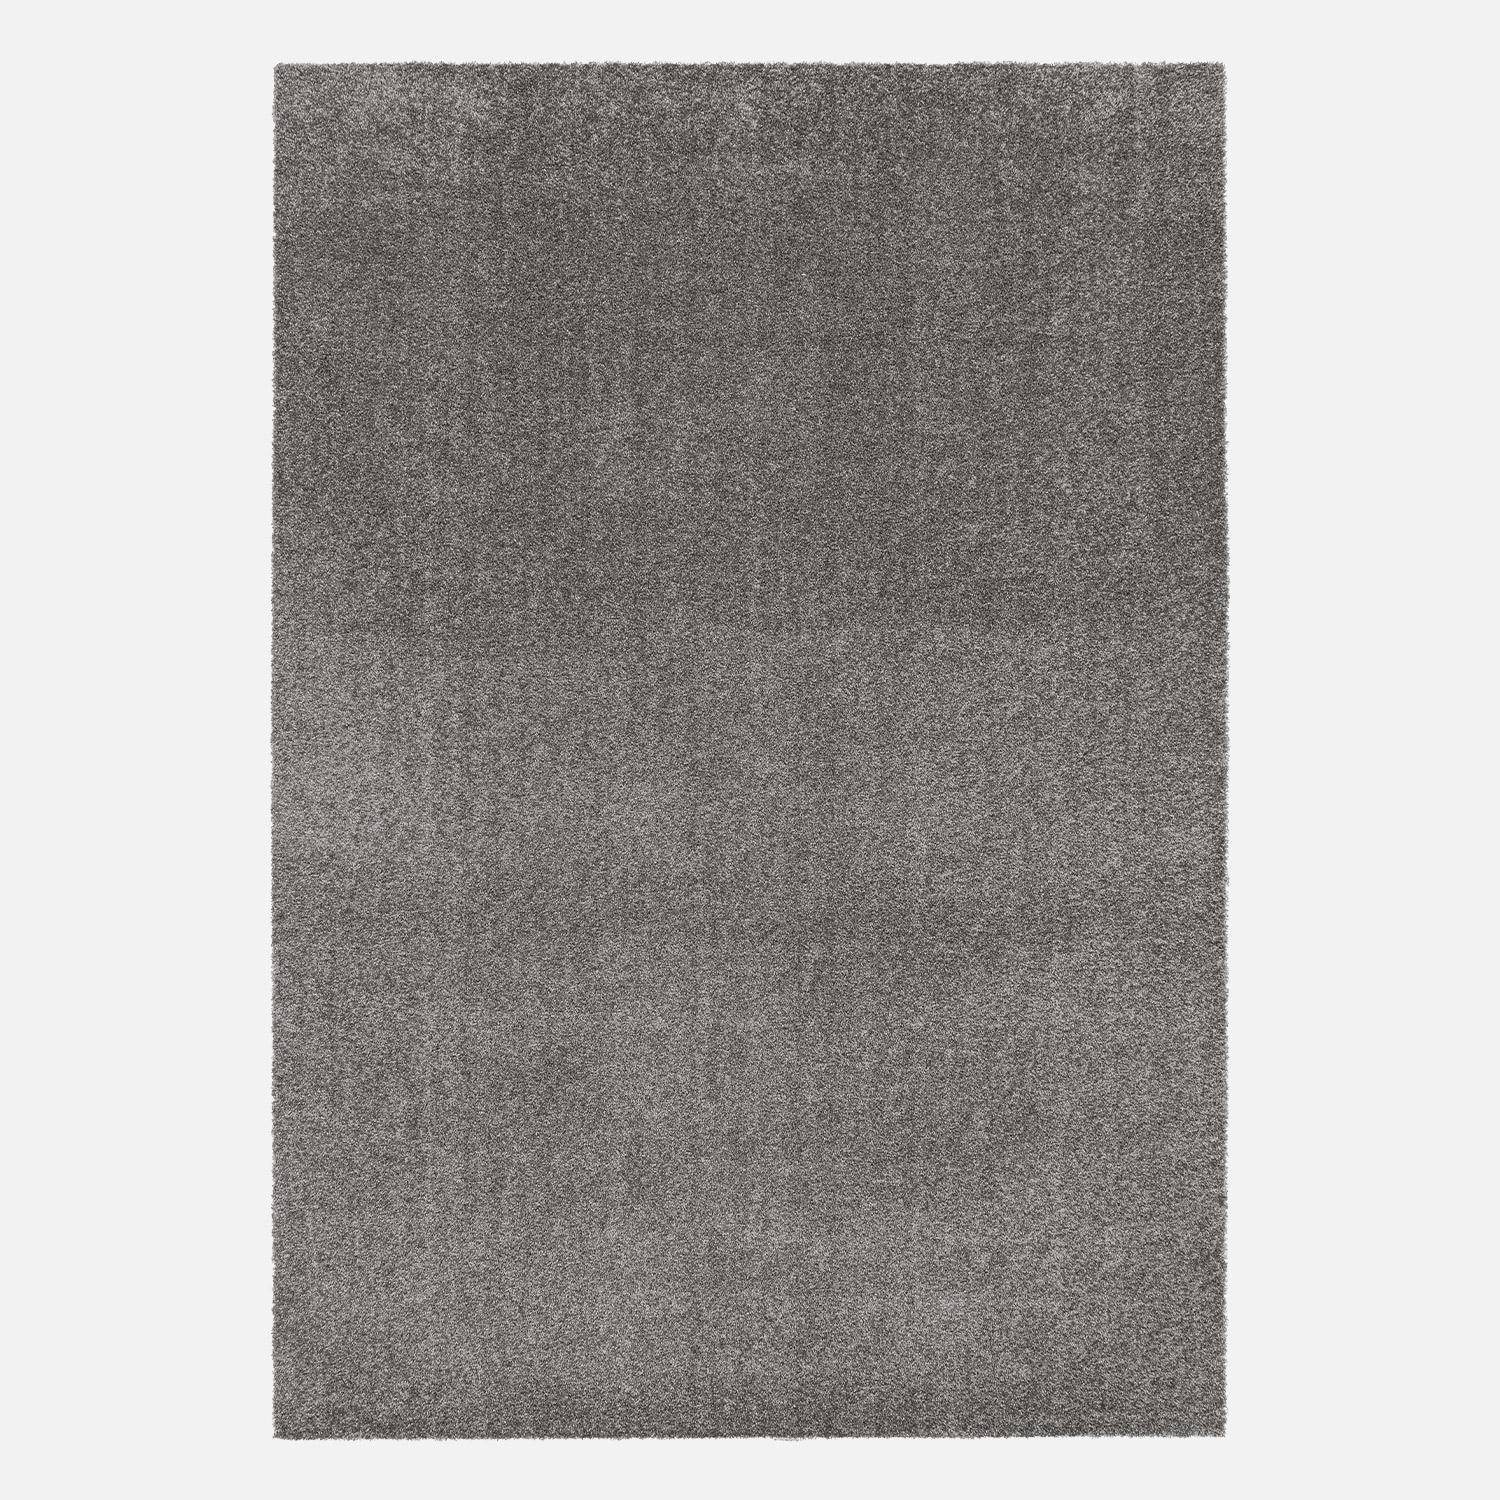 Anthracite grey curly velour interior carpet, Lawrence, 80 x 150 cm Photo4